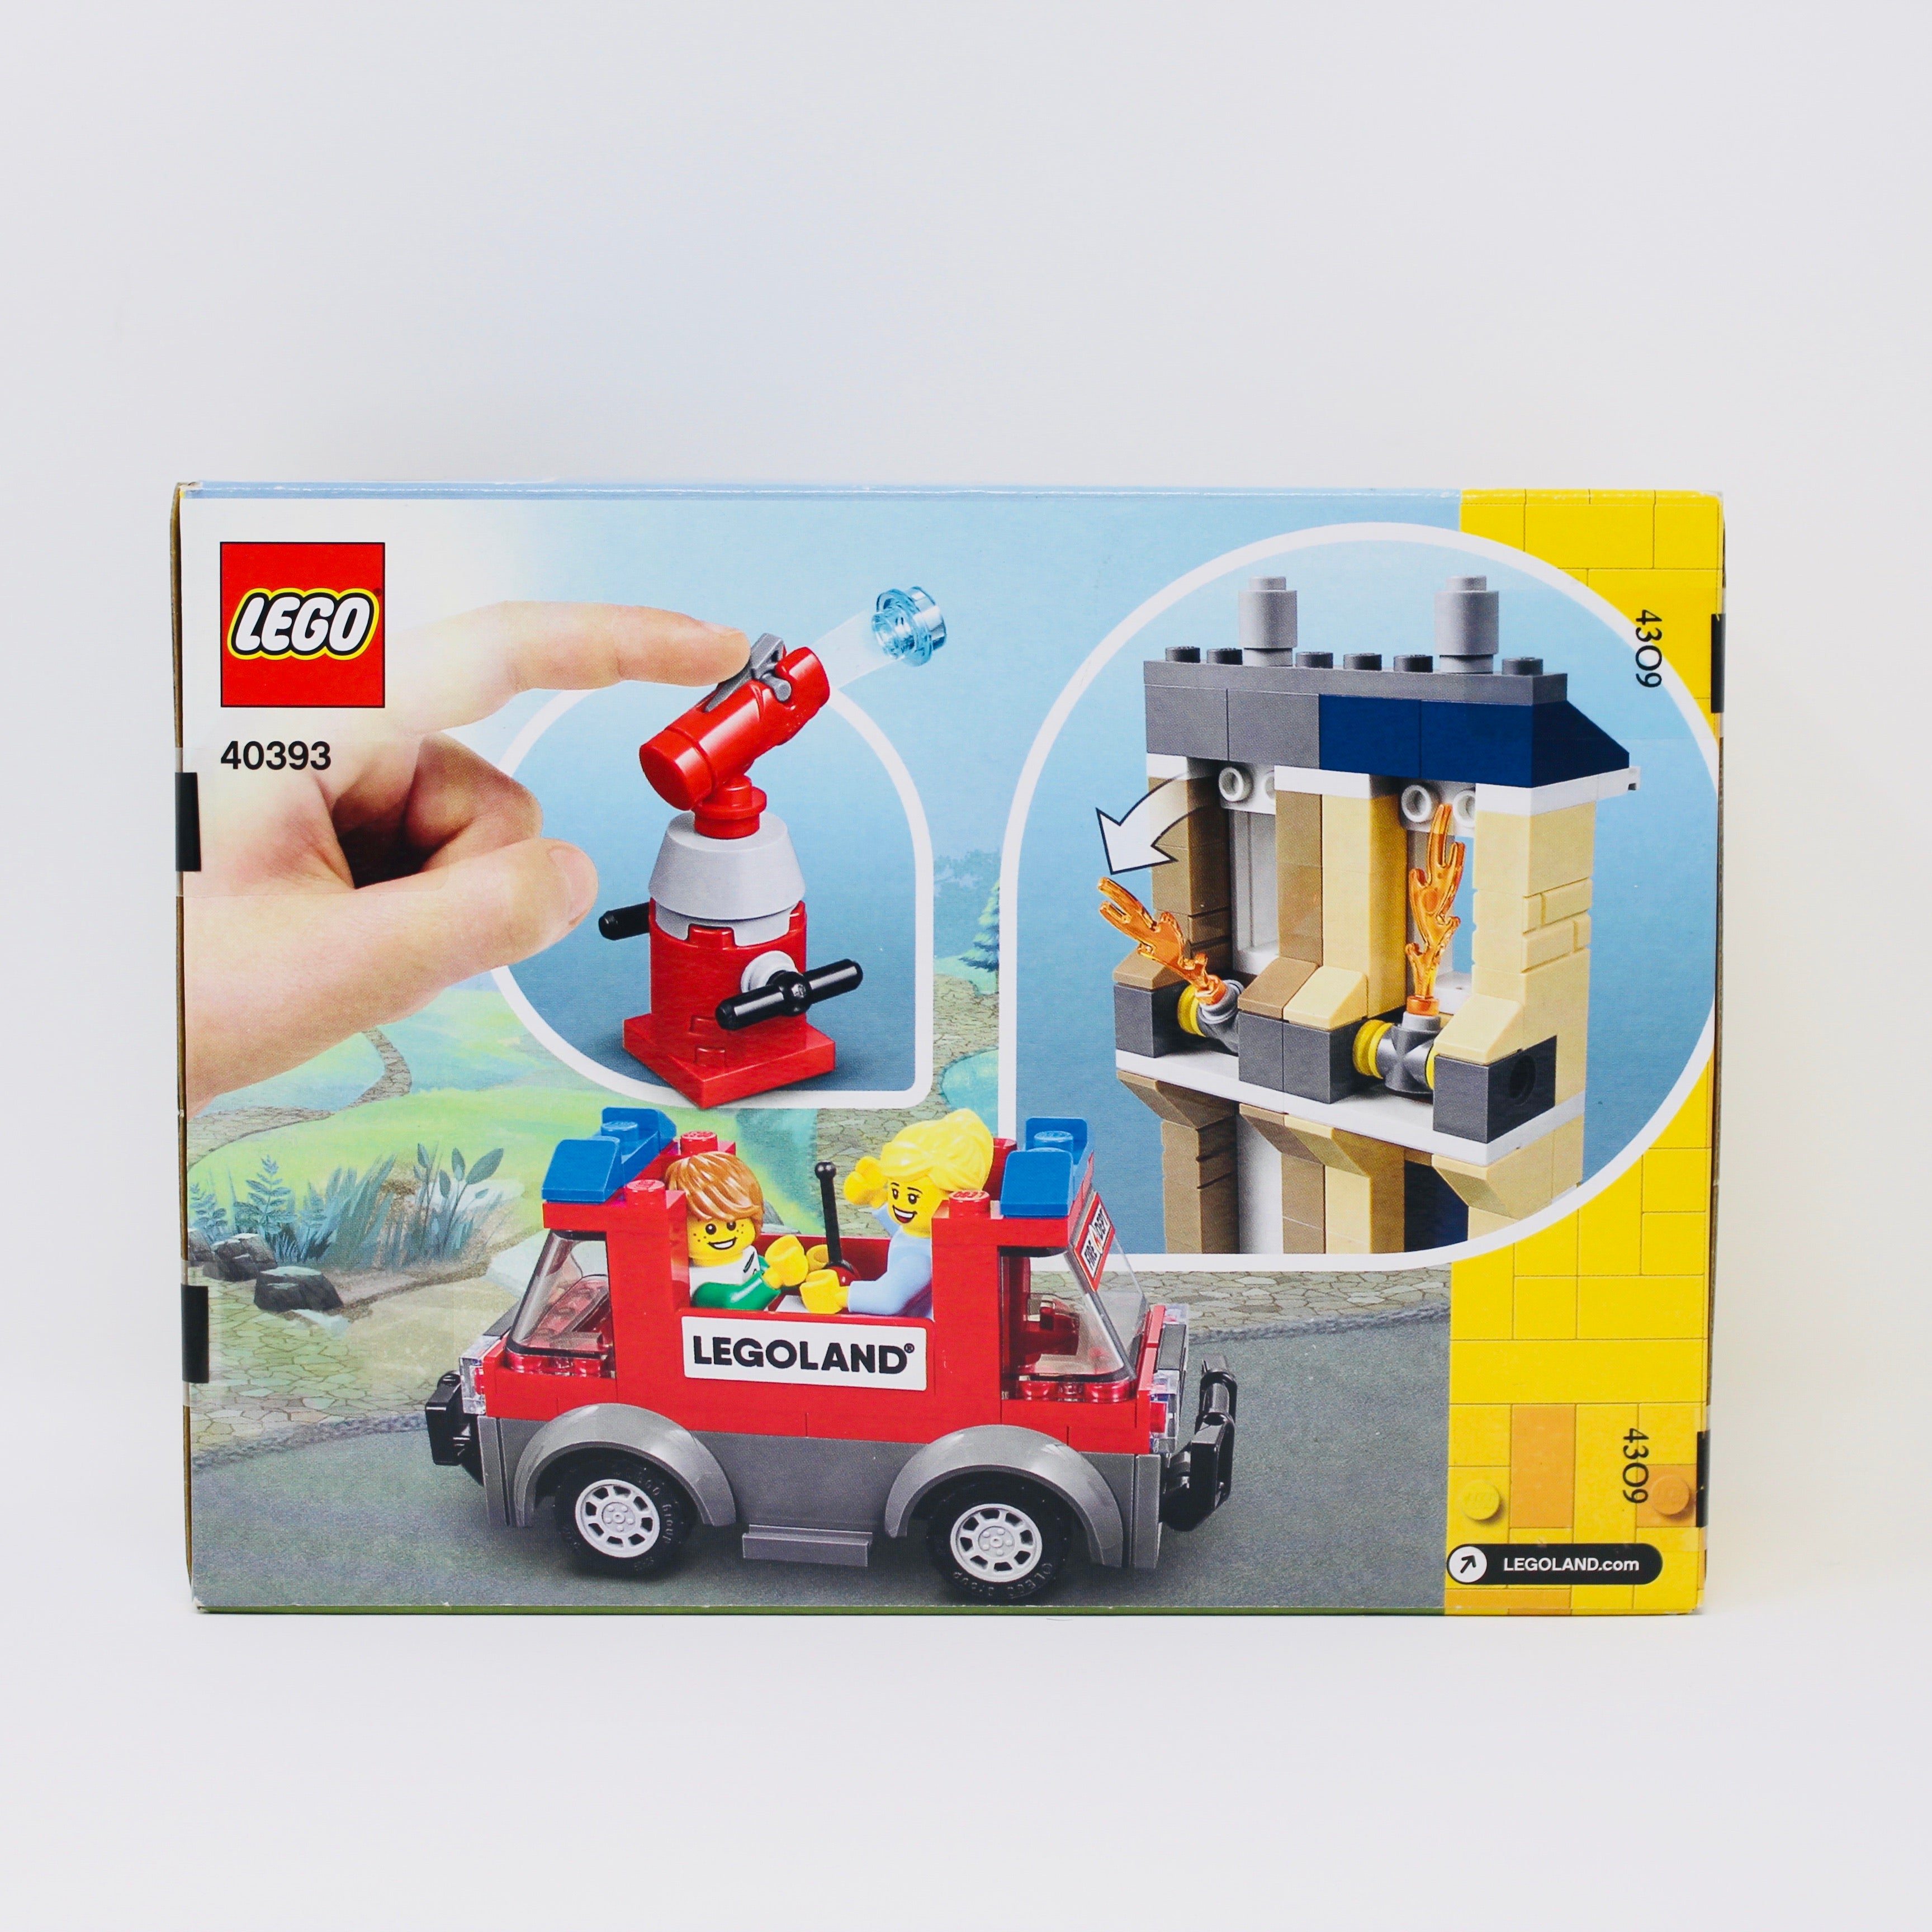 Retired Set 40393 Legoland Fire Academy